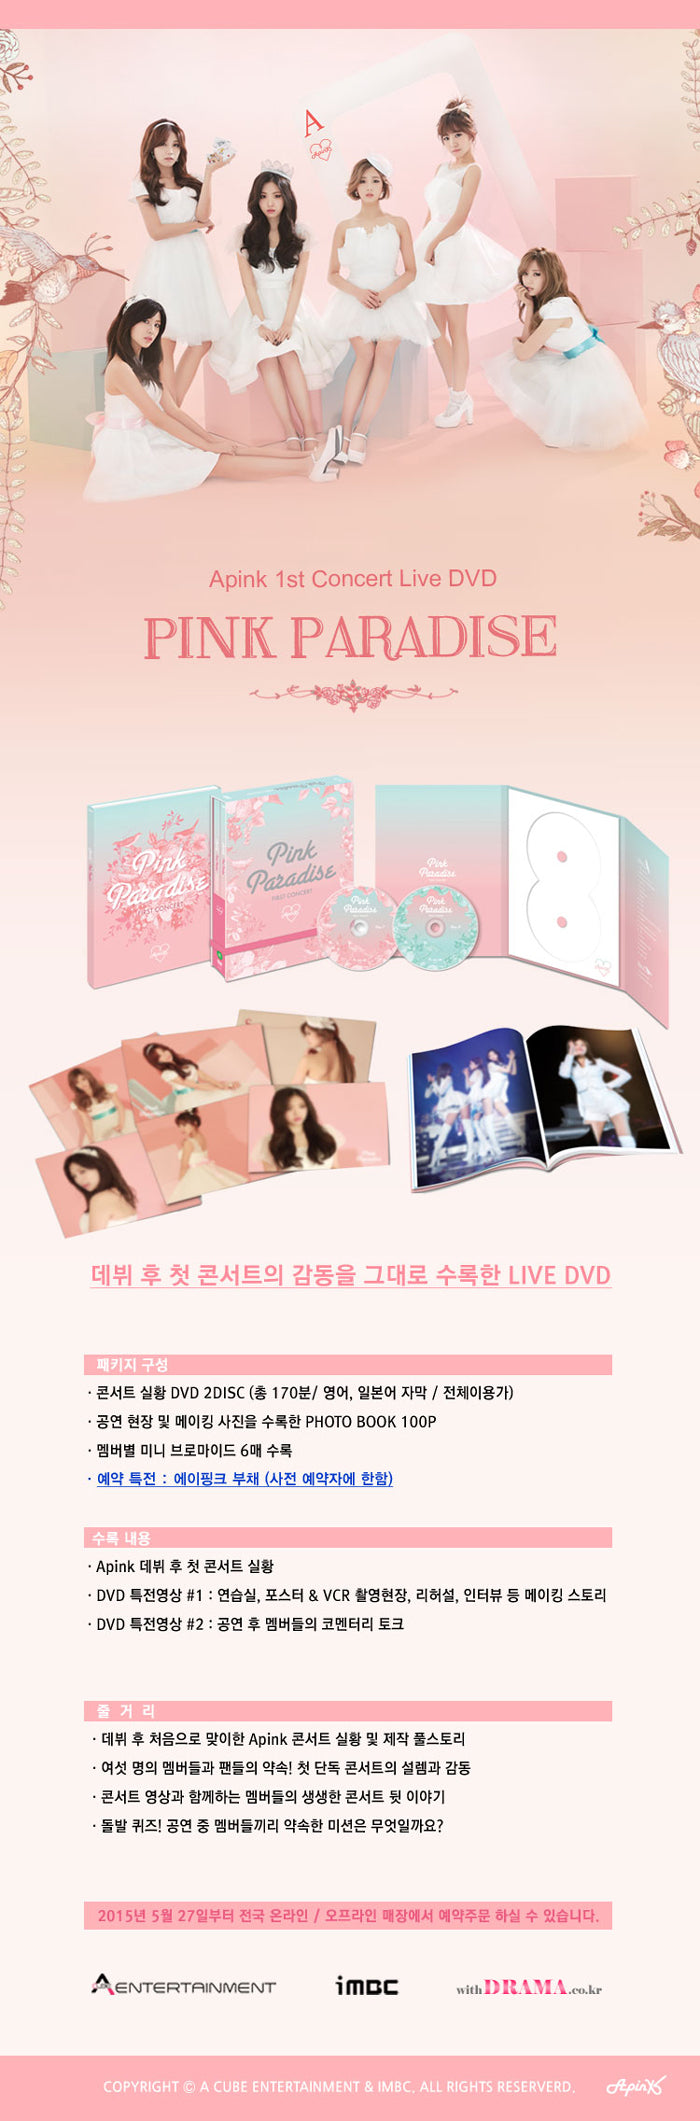 apink-pink-paradise-1st-concert-live-dvd